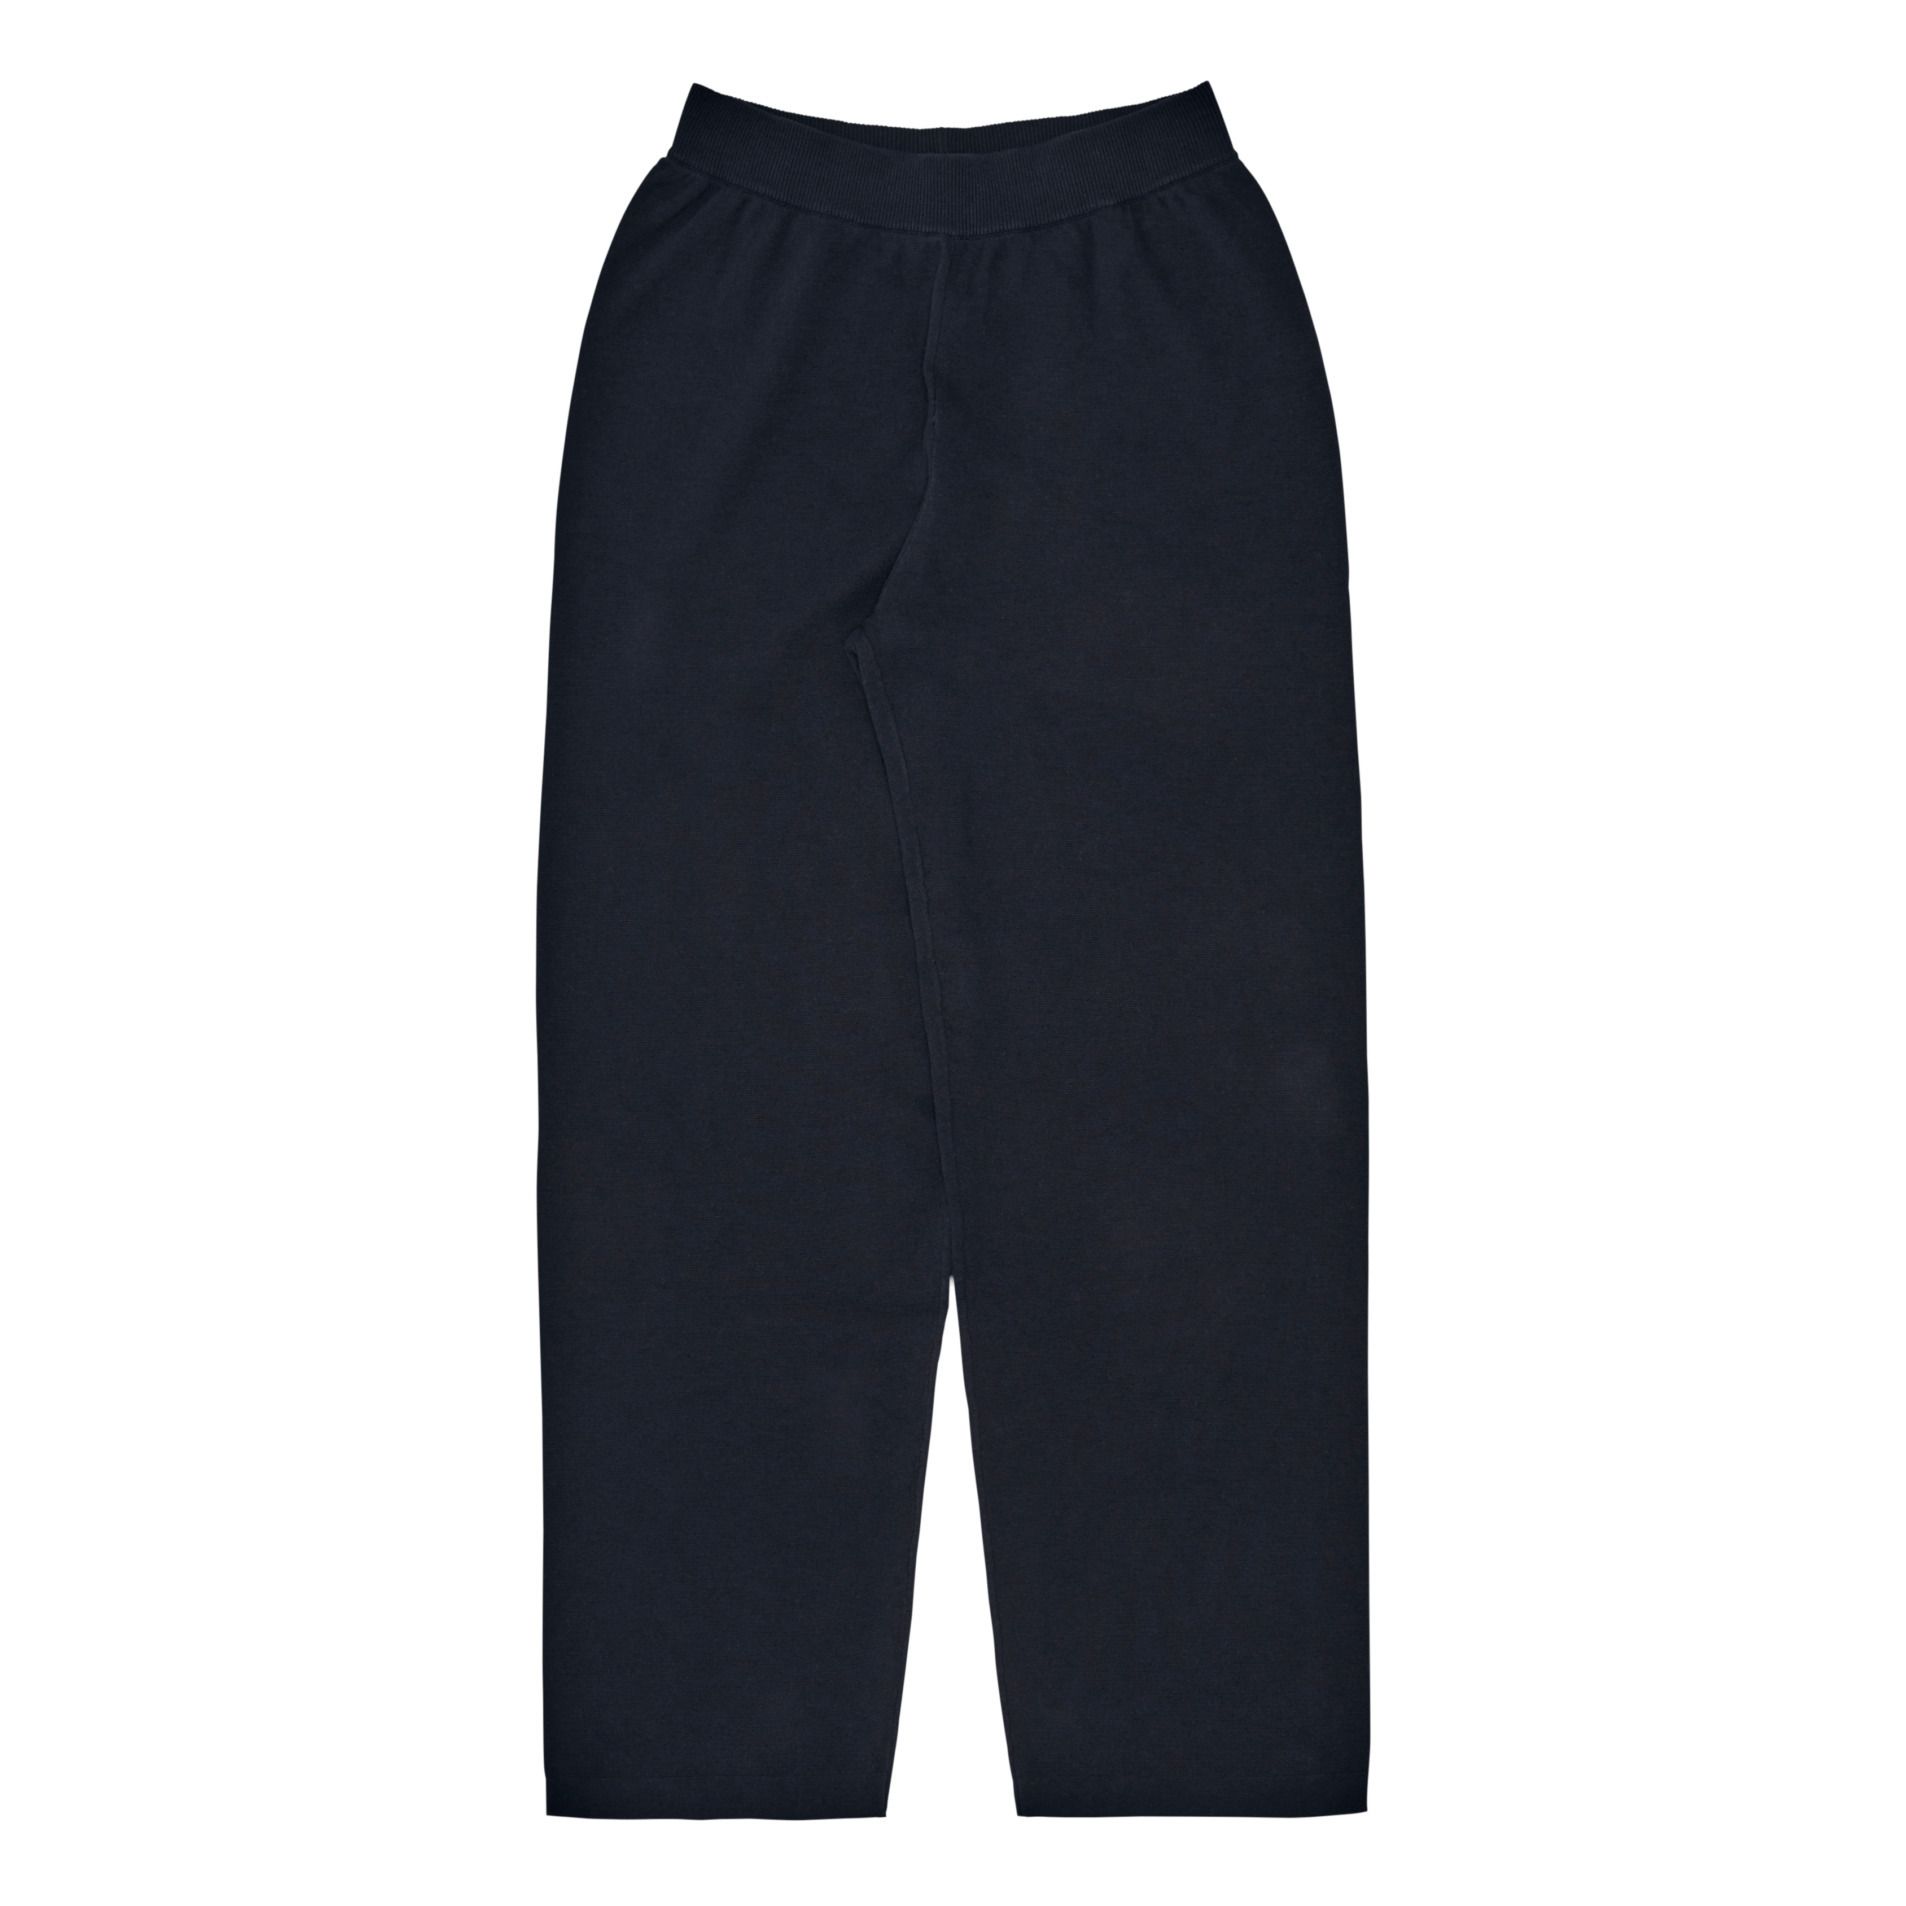 FUB - Pantalon Coton Bio - Femme - Bleu marine